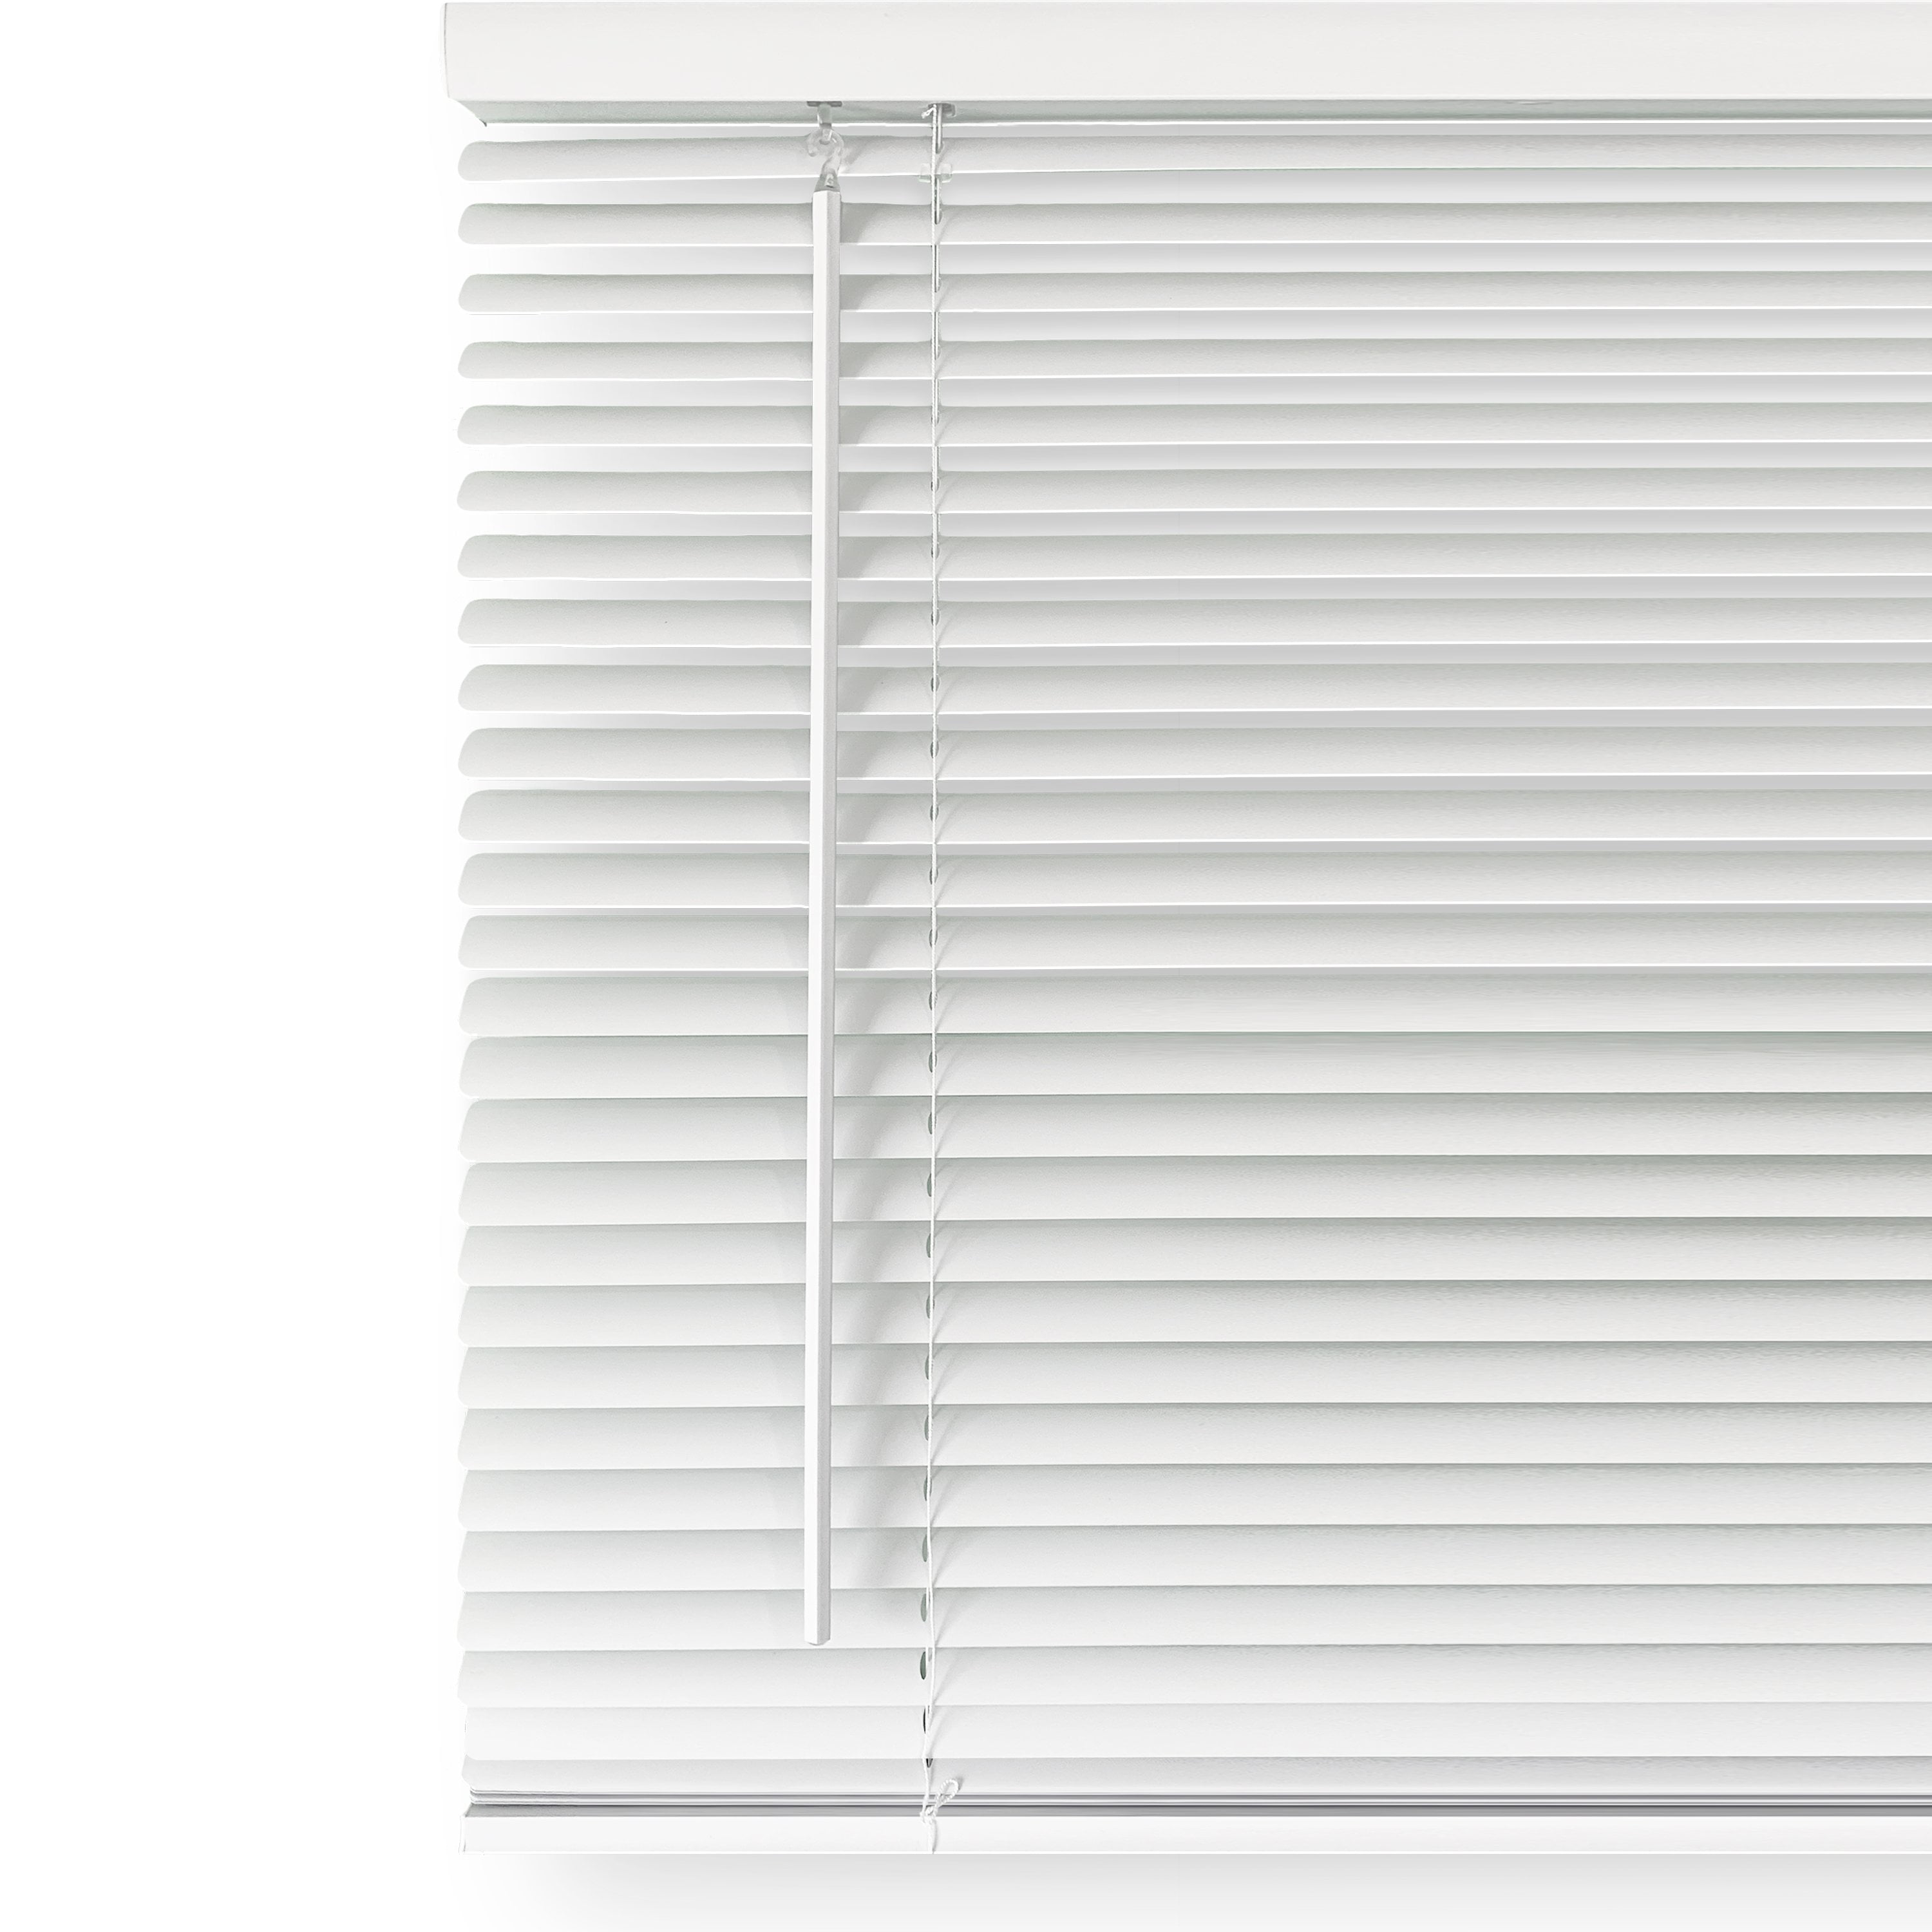 72x48 Inch Espresso Faux Wood Blind Cordless Room Darkening Privacy Window Shade 